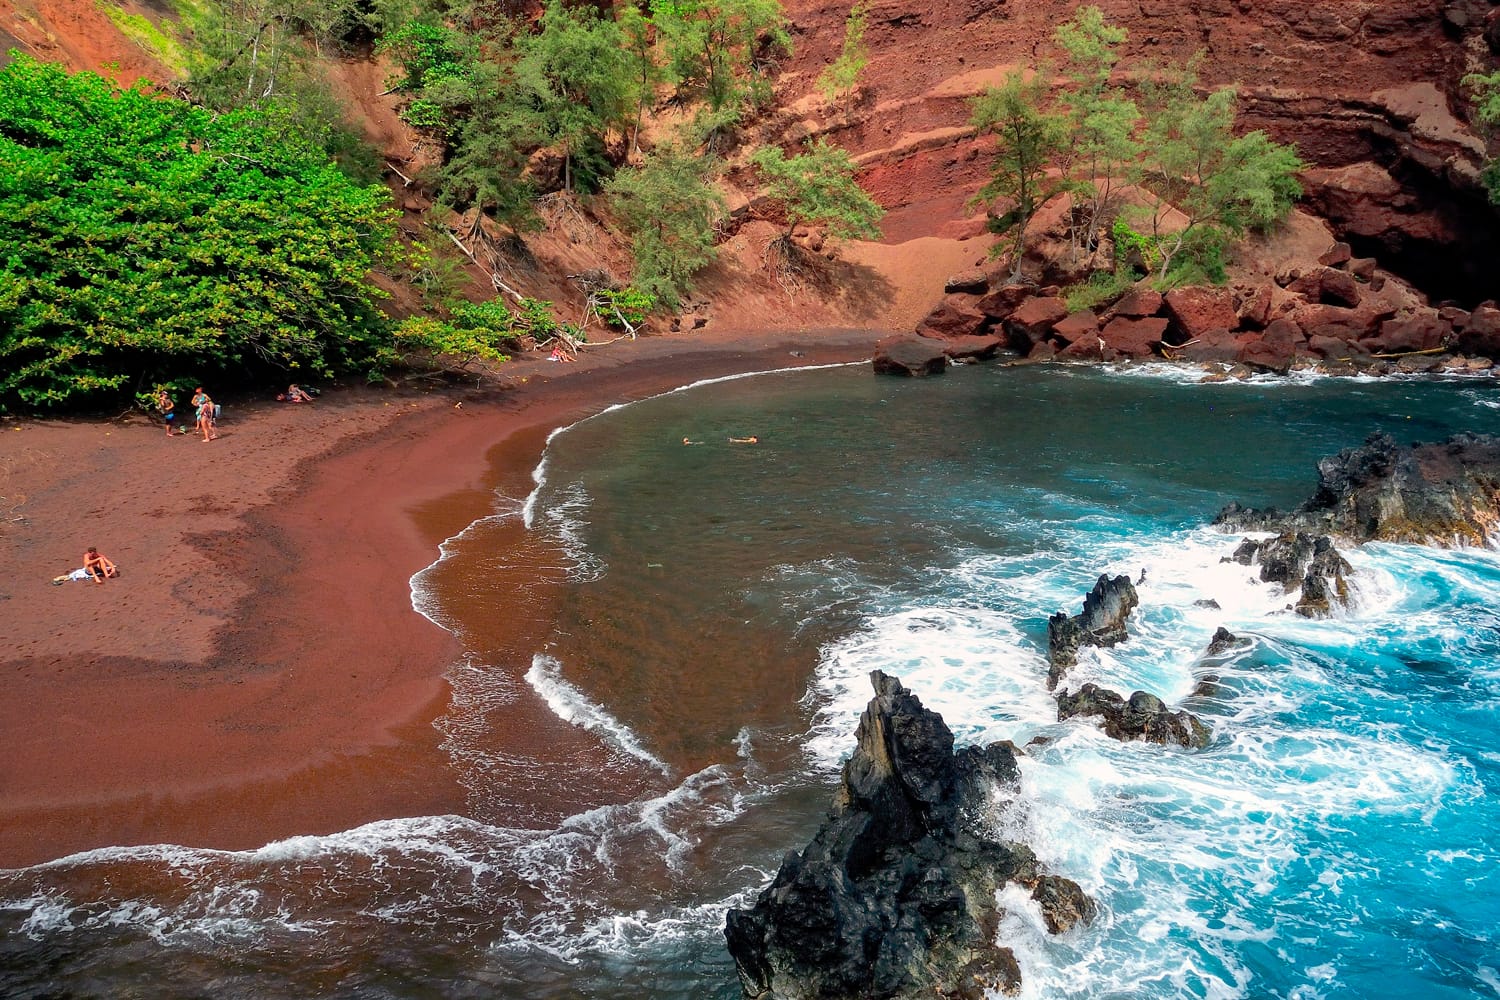 Kaihalulu Red Sand Beach in Maui, Hawaii